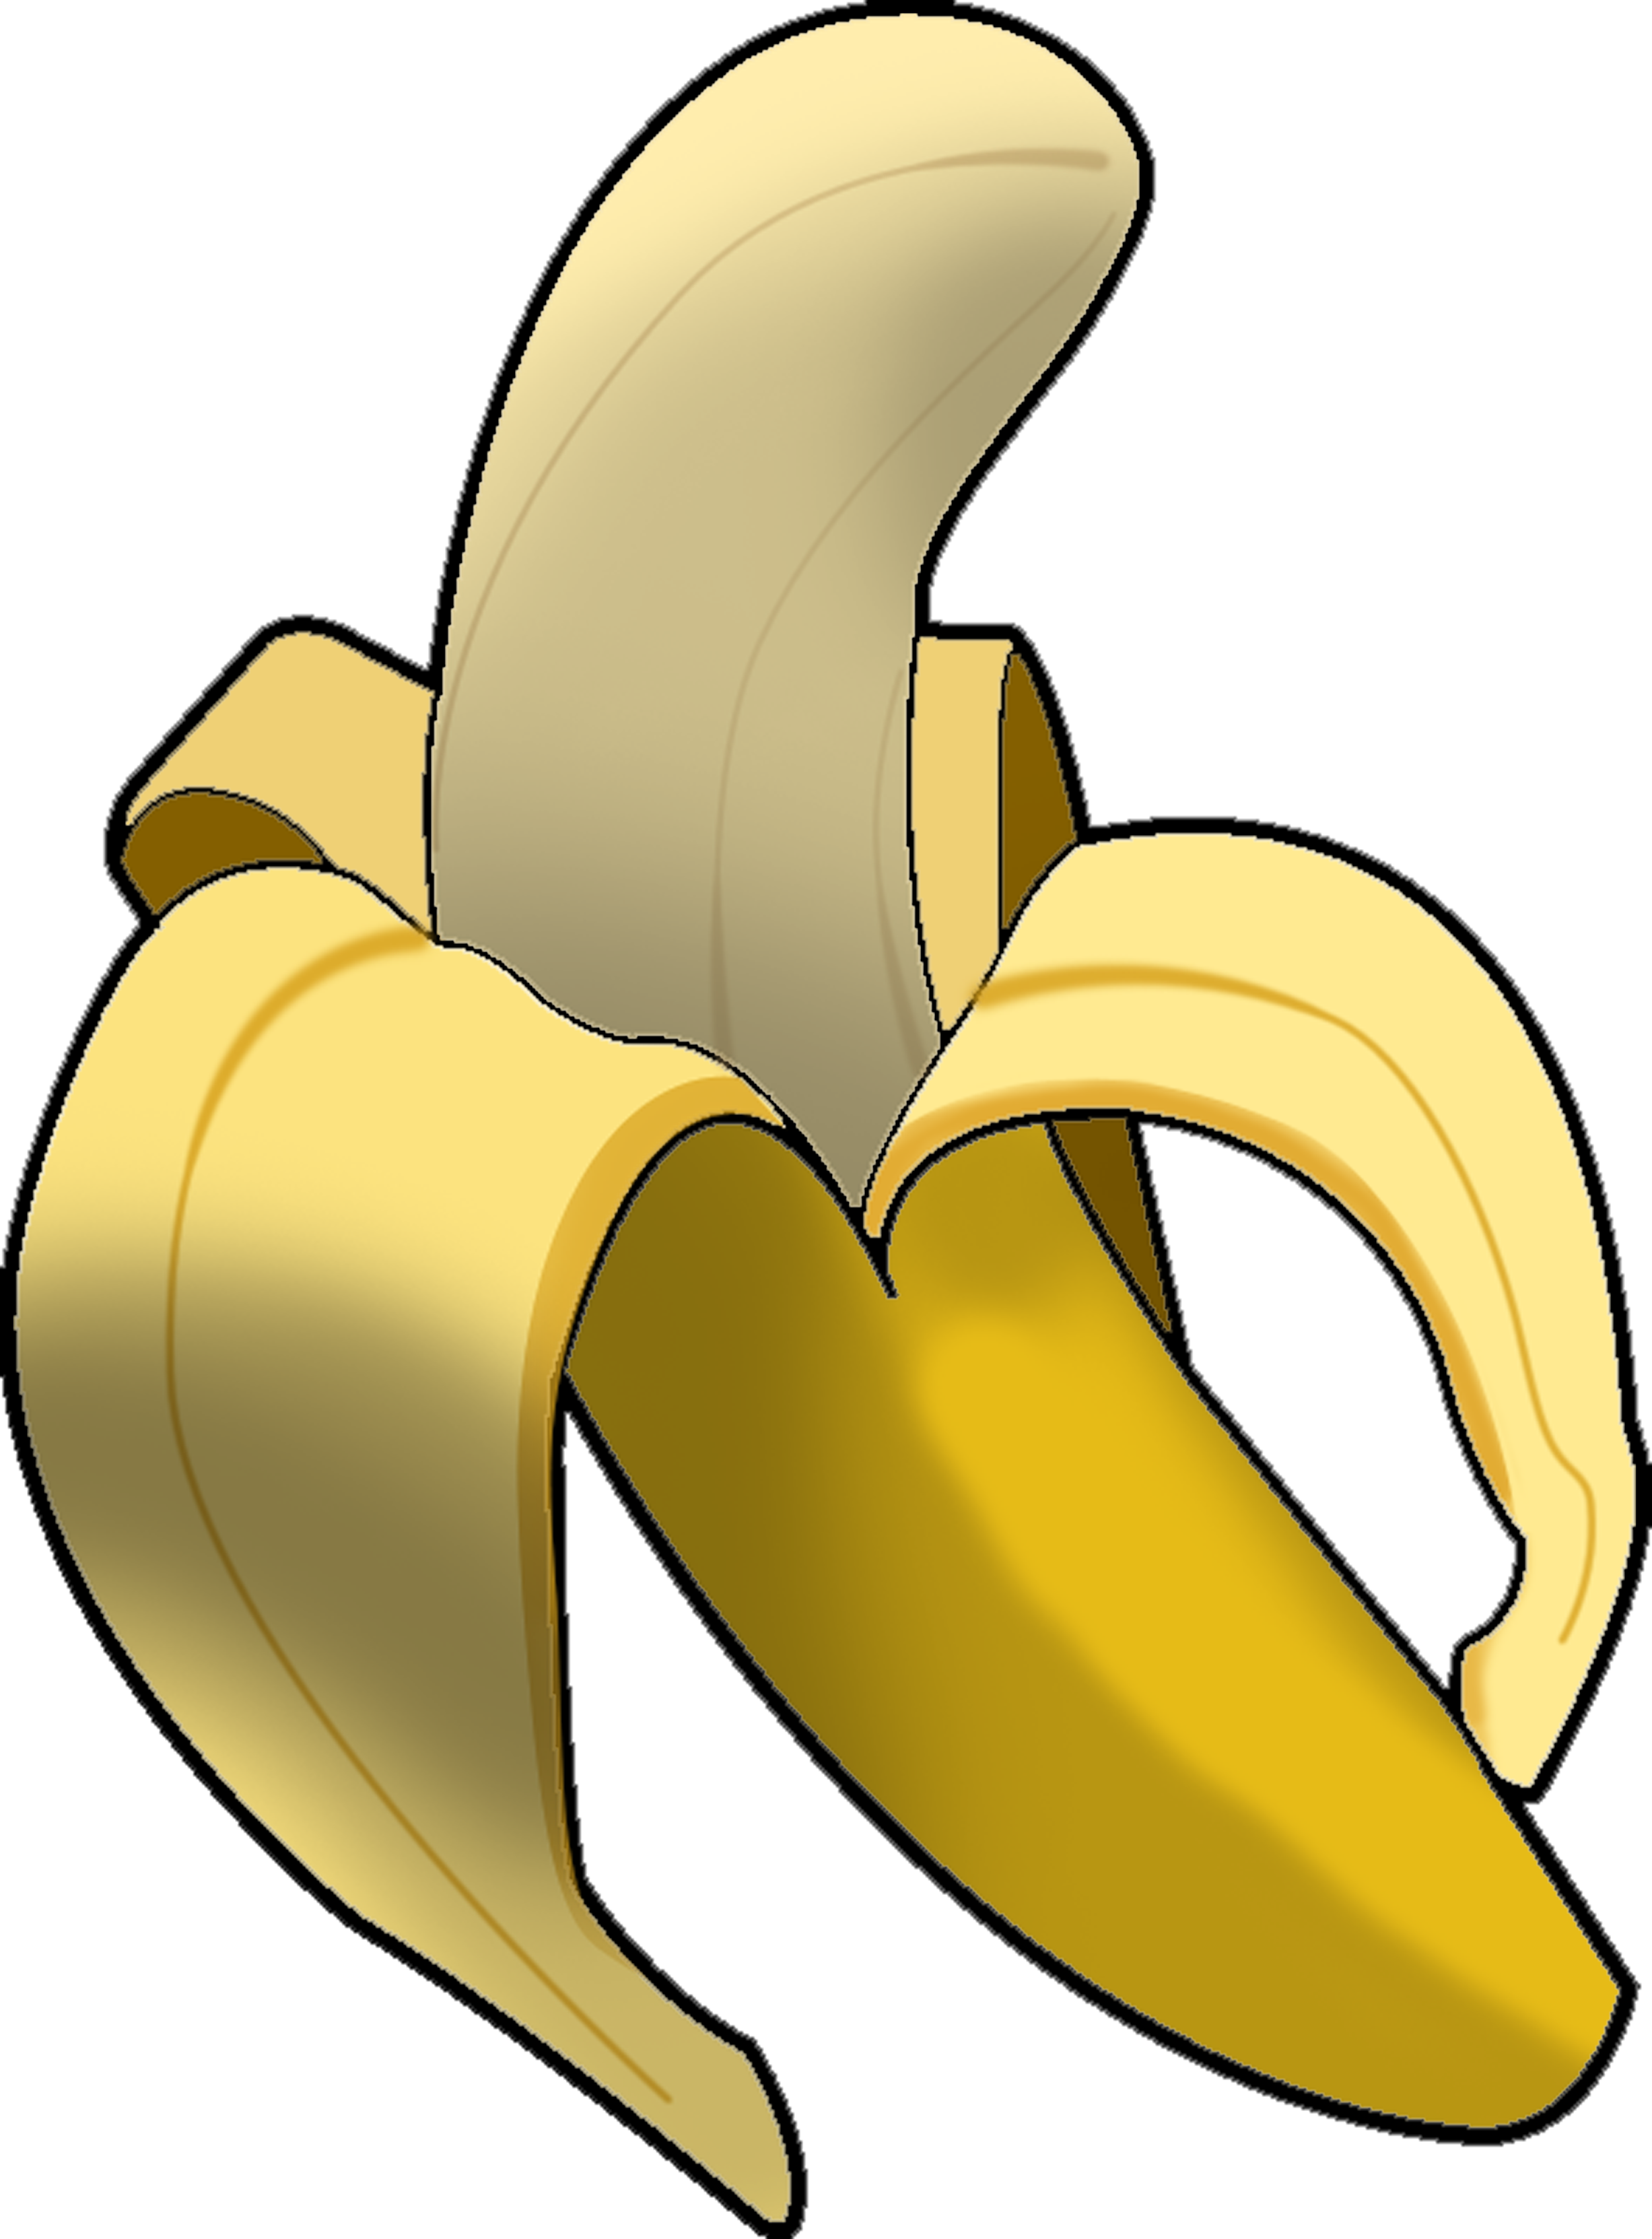 Banana Cartoon Picture Free Download Clip Art Free Clip Art